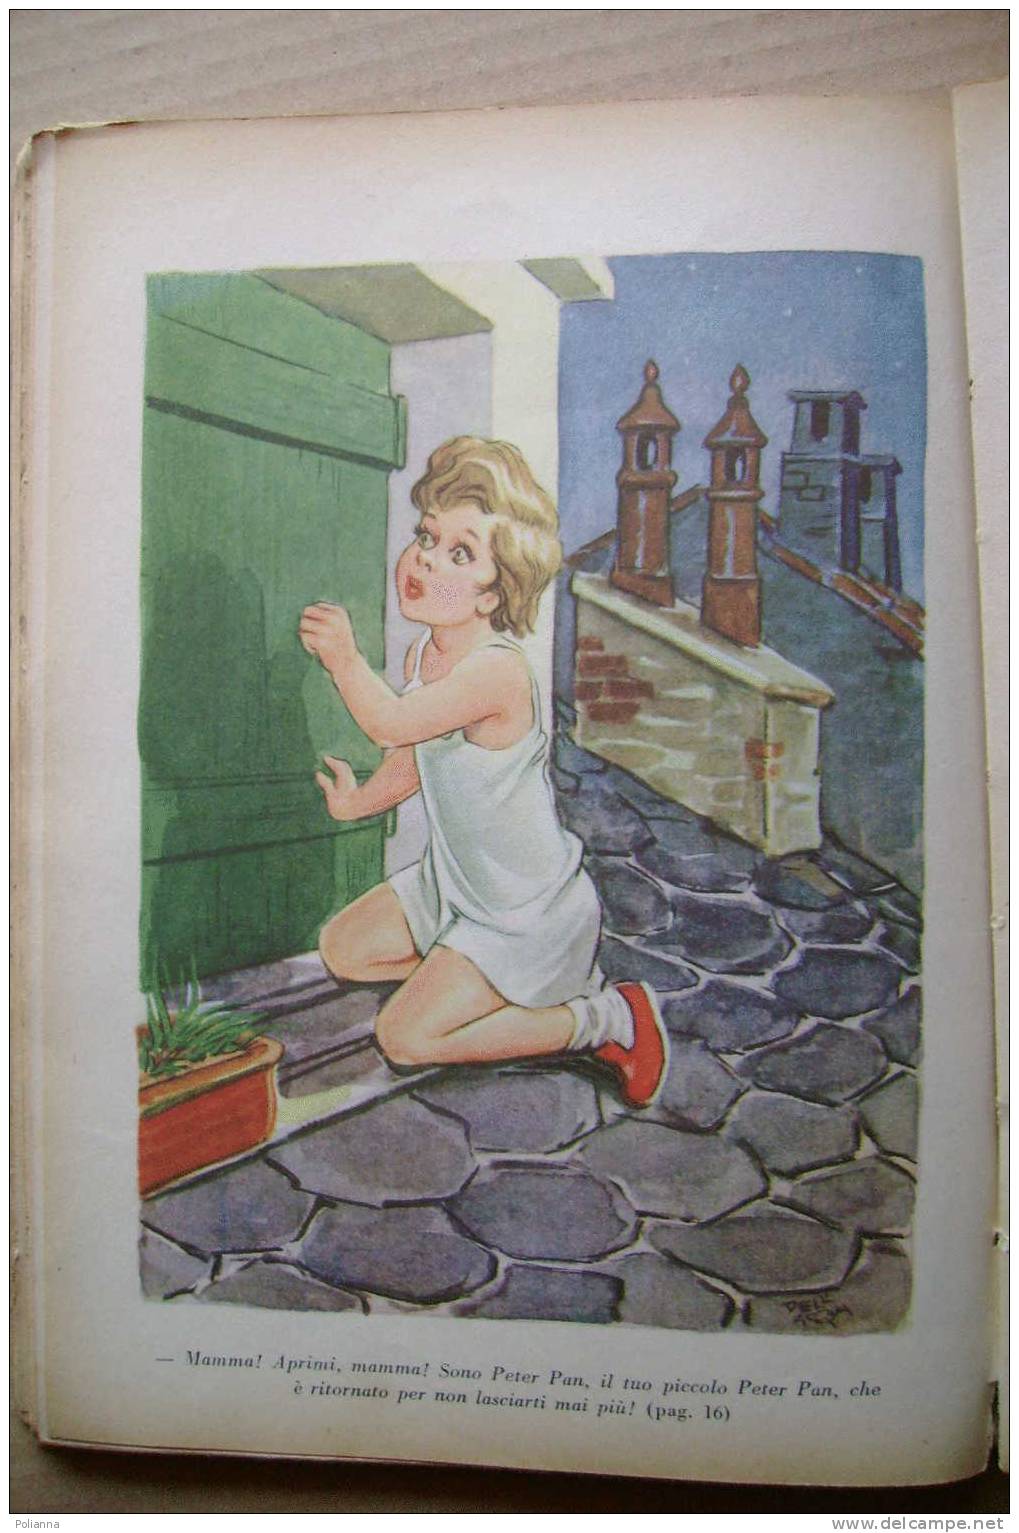 PDF/5  PETER PAN ED ALTRE FIABE Tip.Lucchi 1955 - Illustrato - Oud